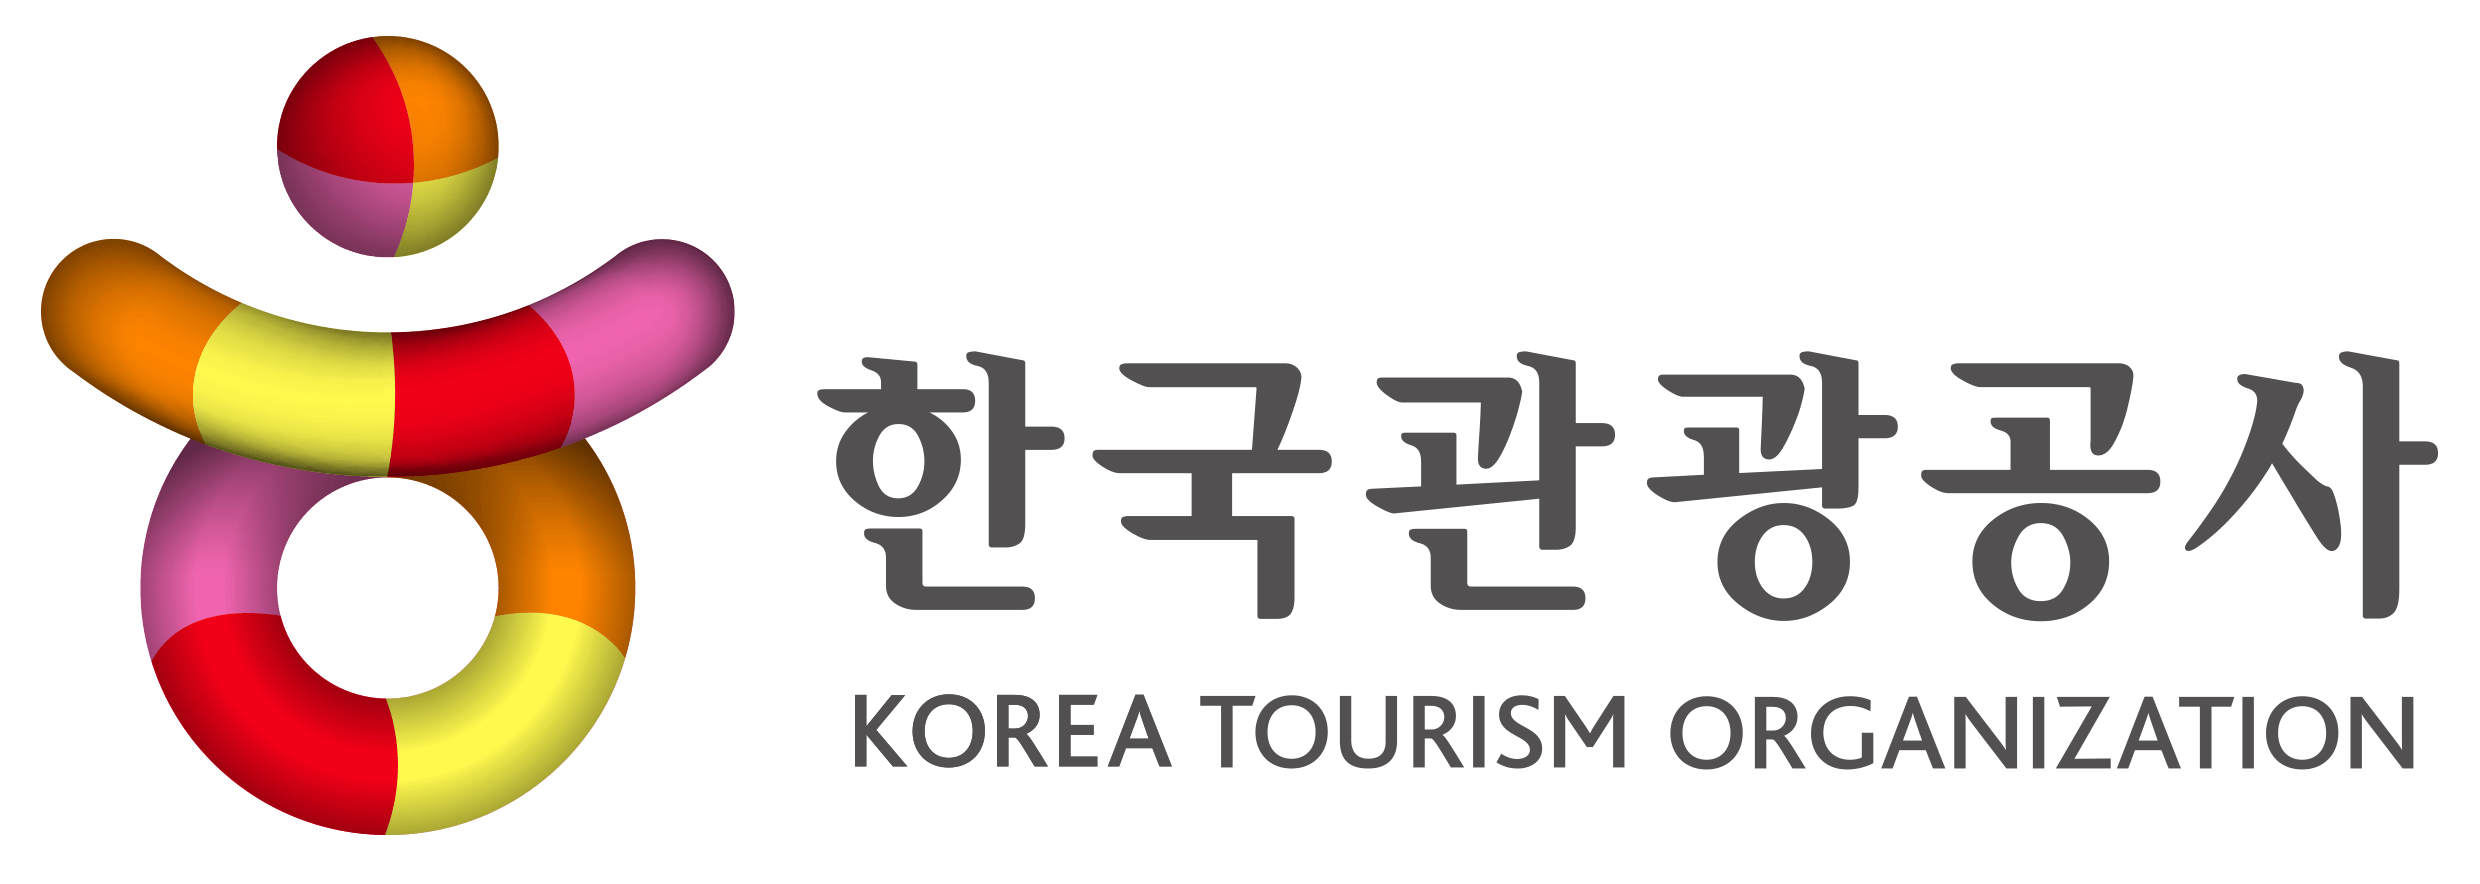 Kto Logo - Korea Tourism Organization Indonesia Article